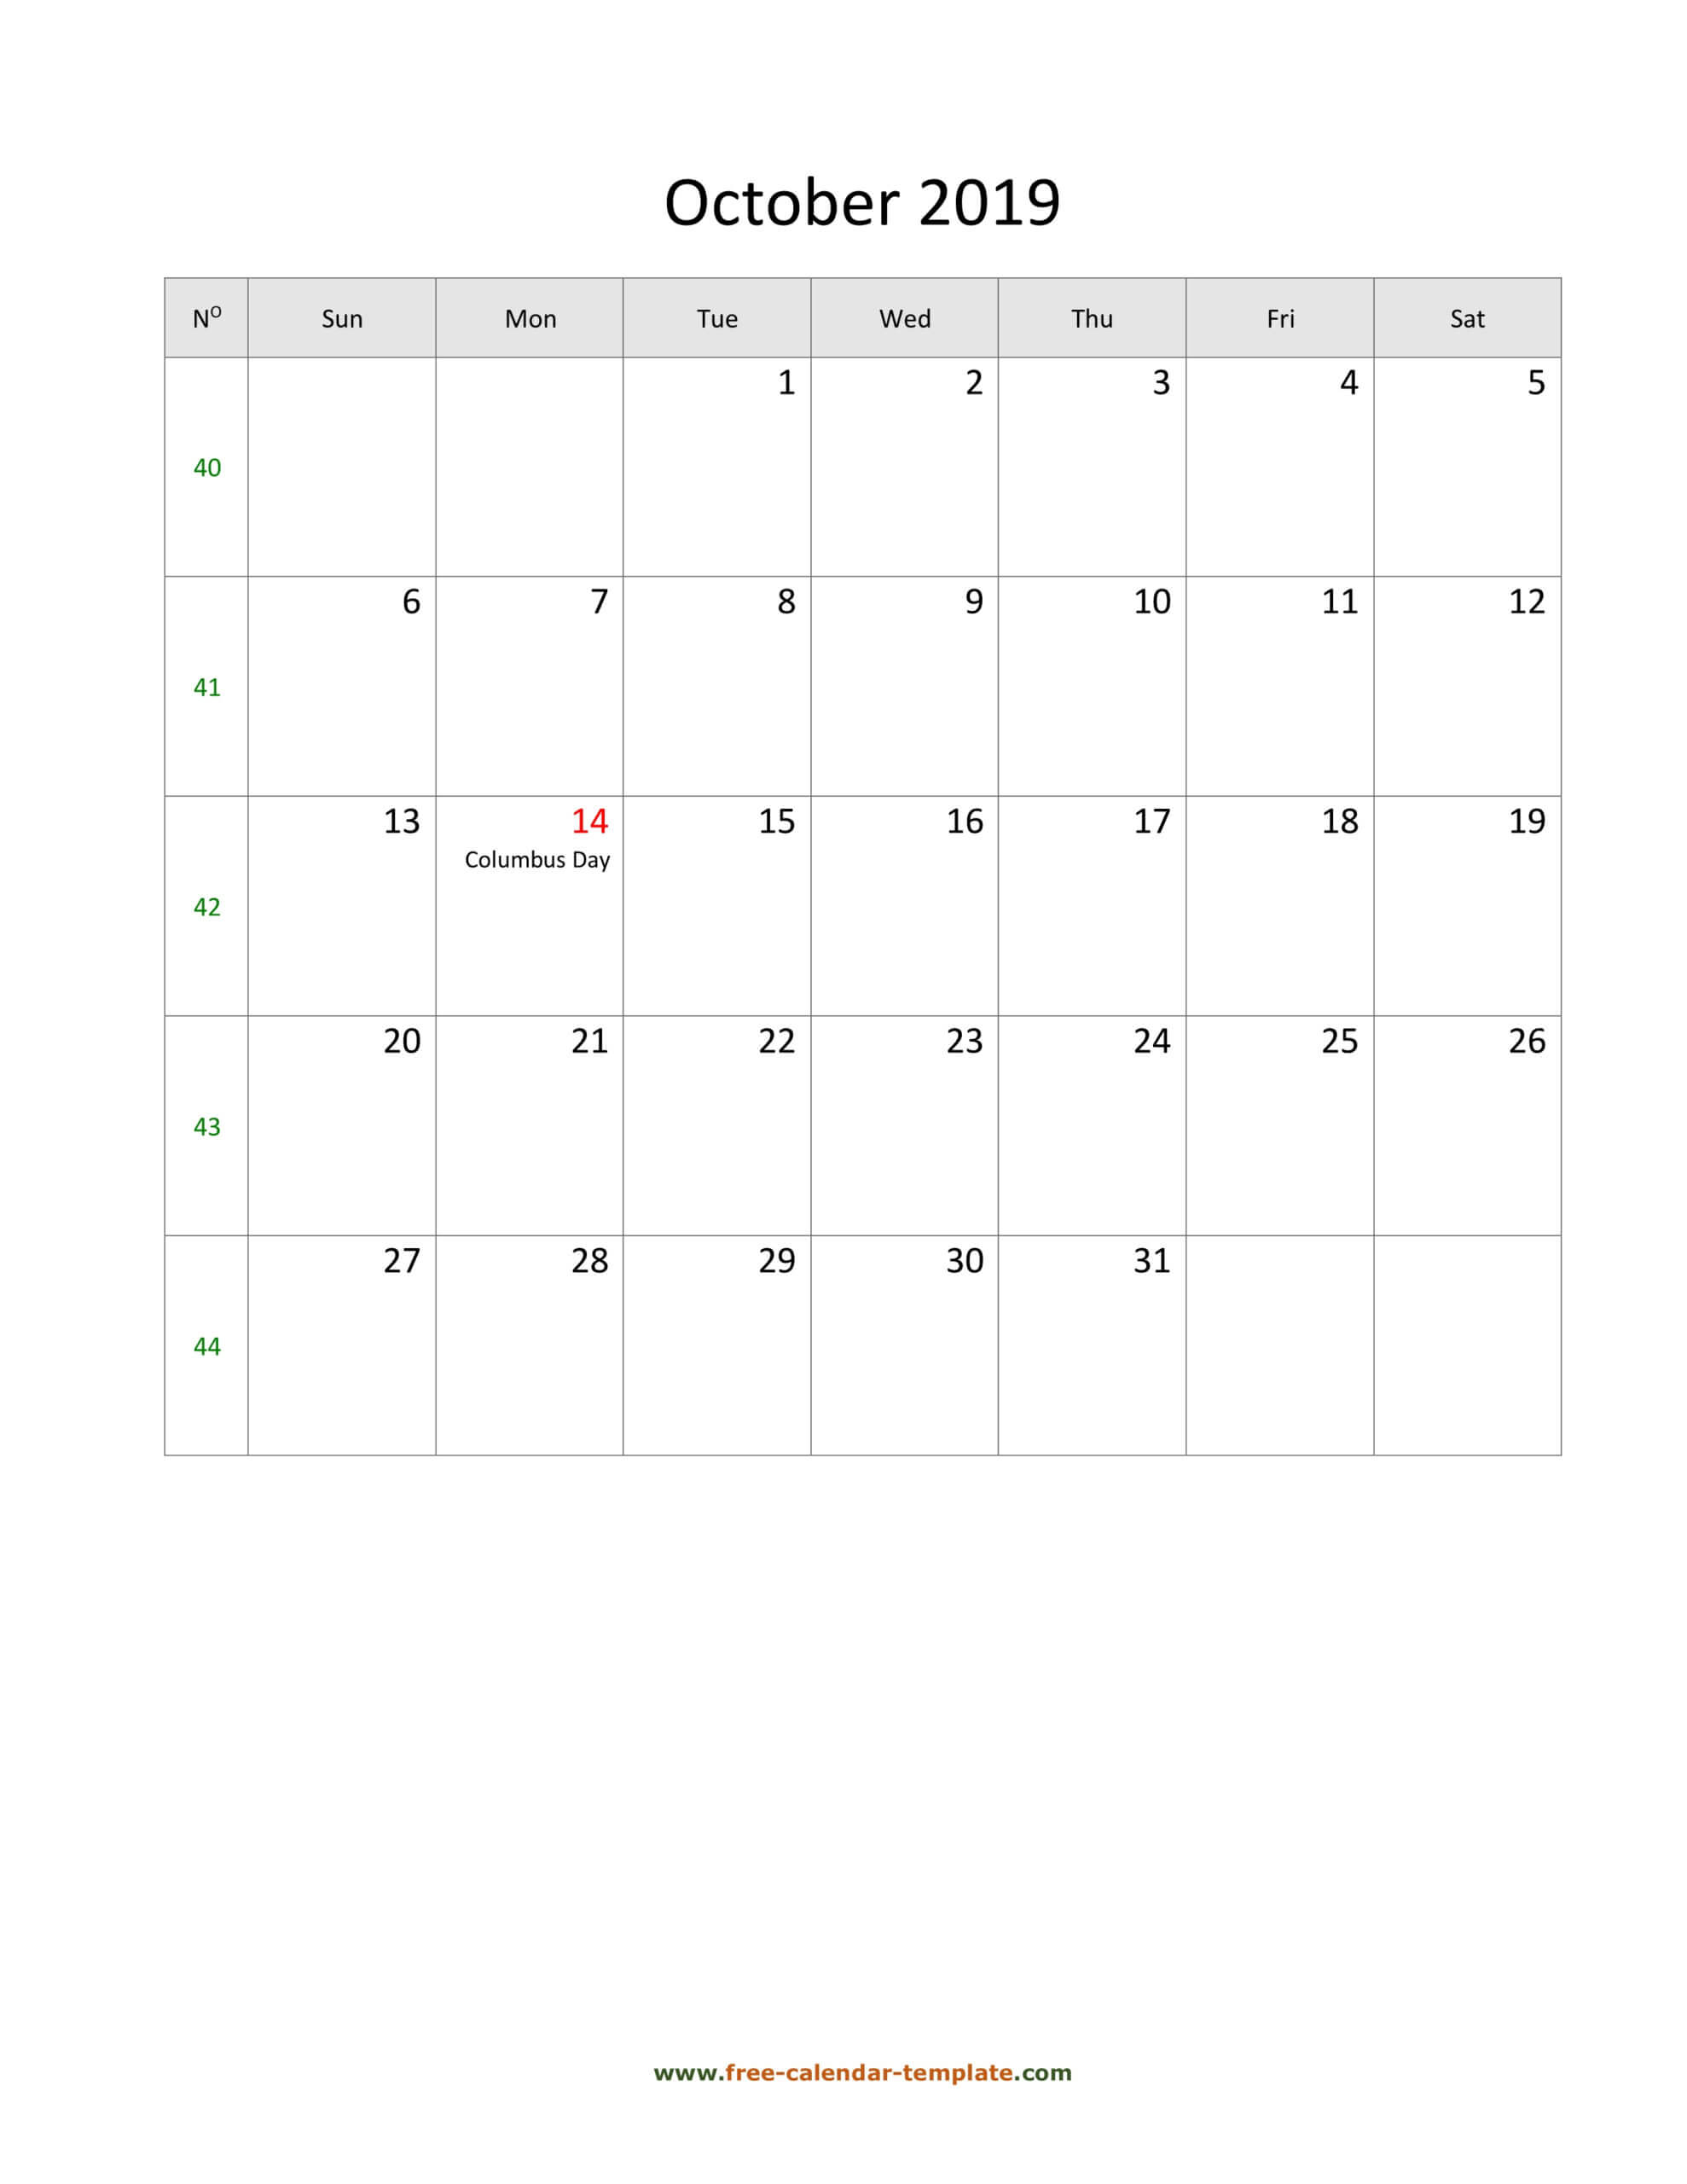 October 2019 Free Calendar Tempplate | Free Calendar Intended For Blank Activity Calendar Template